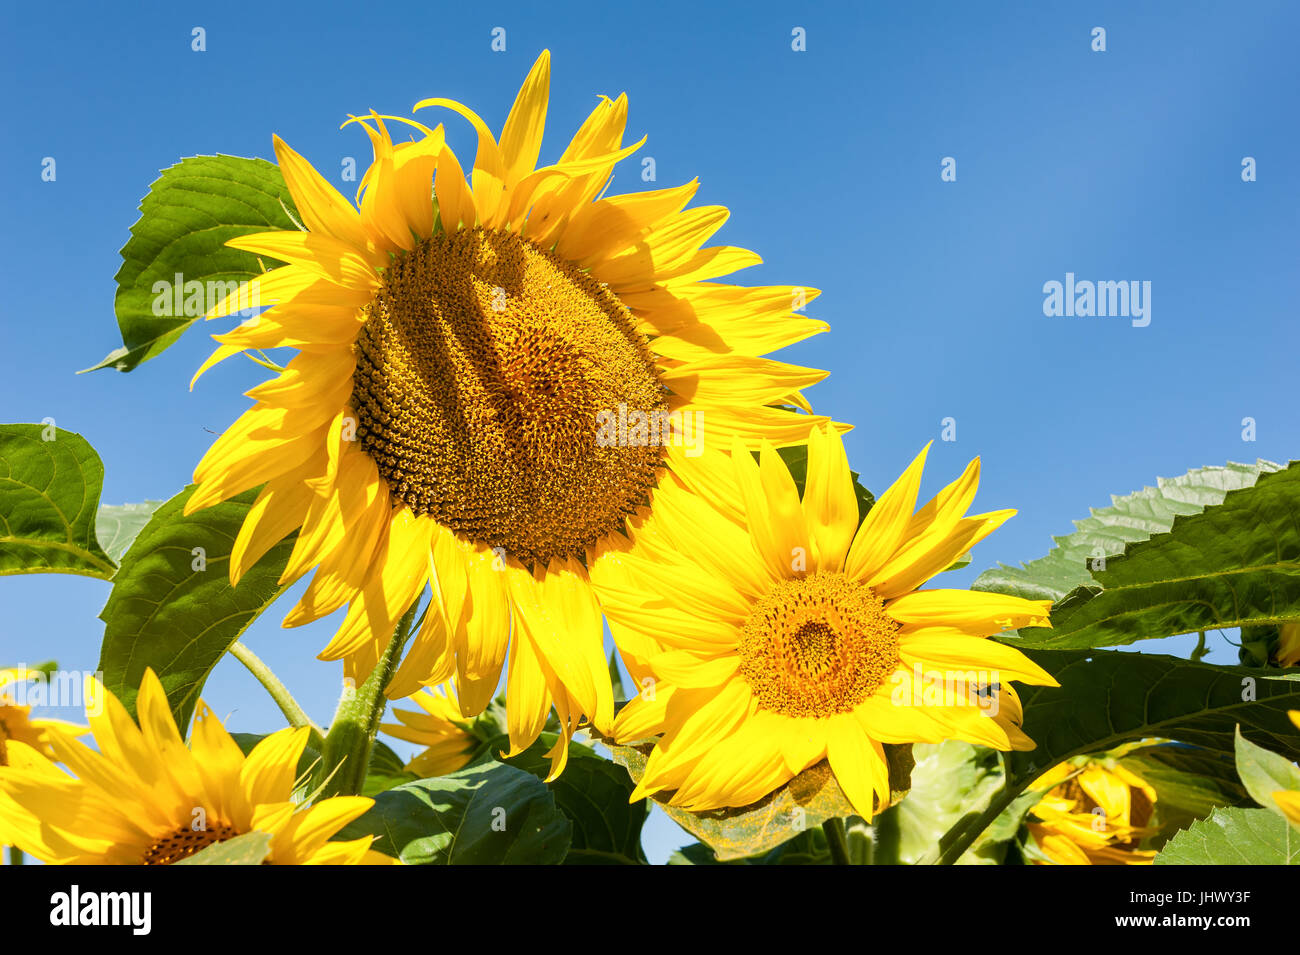 Sunflower in blossom. Sunflower blue sky landscape. Sunflowers close up. Stock Photo